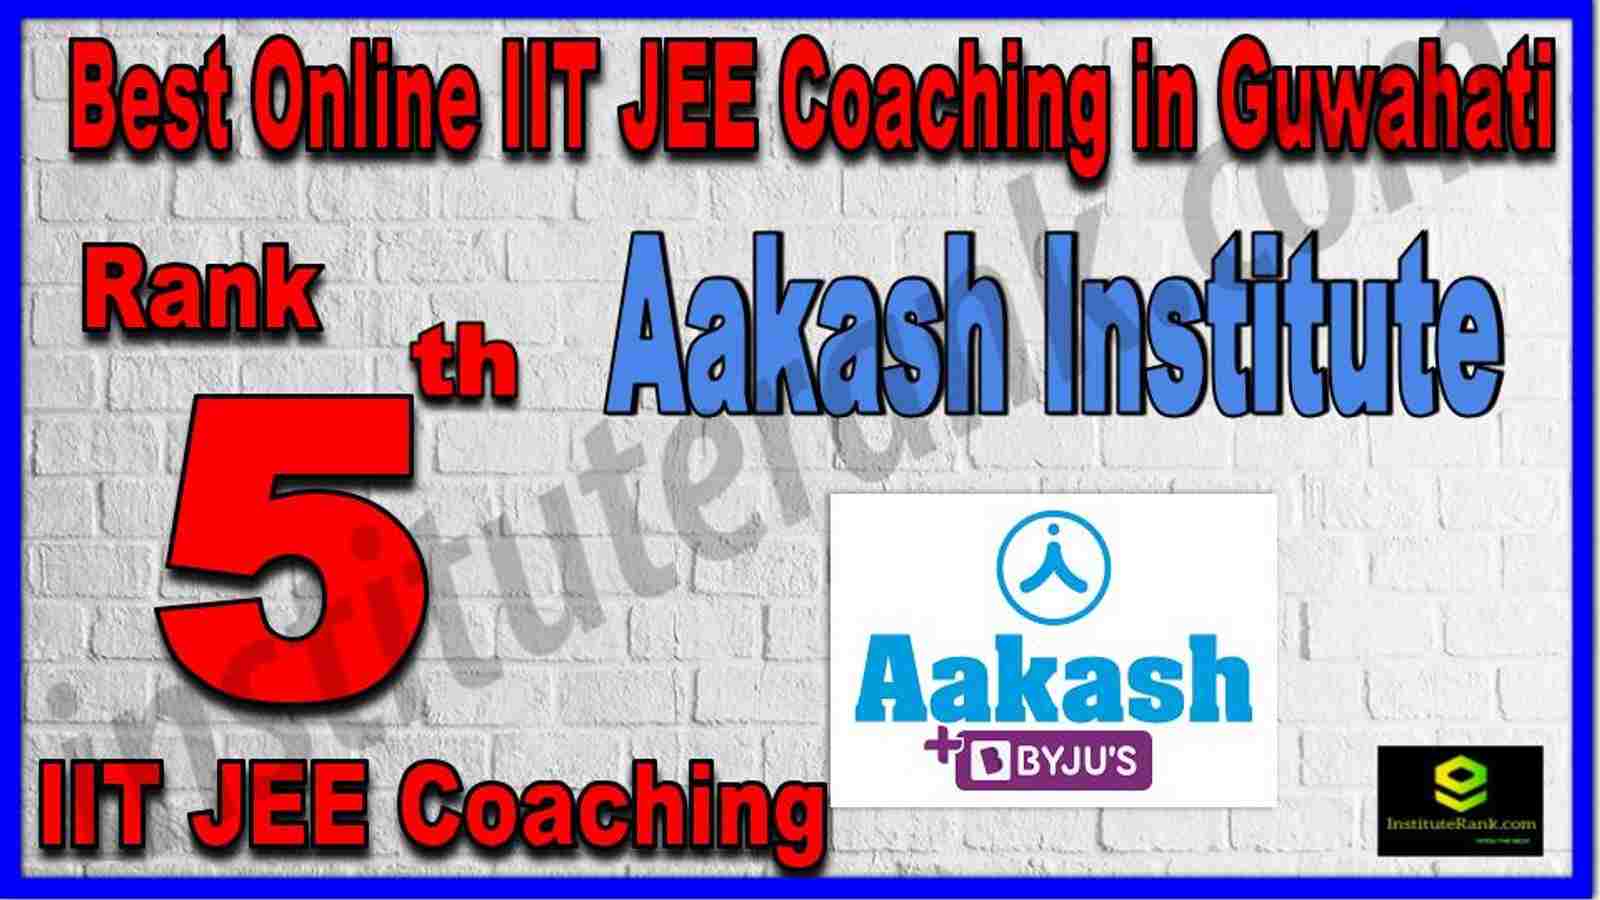 Rank 5th Best Online IIT JEE Coaching in Guwahati